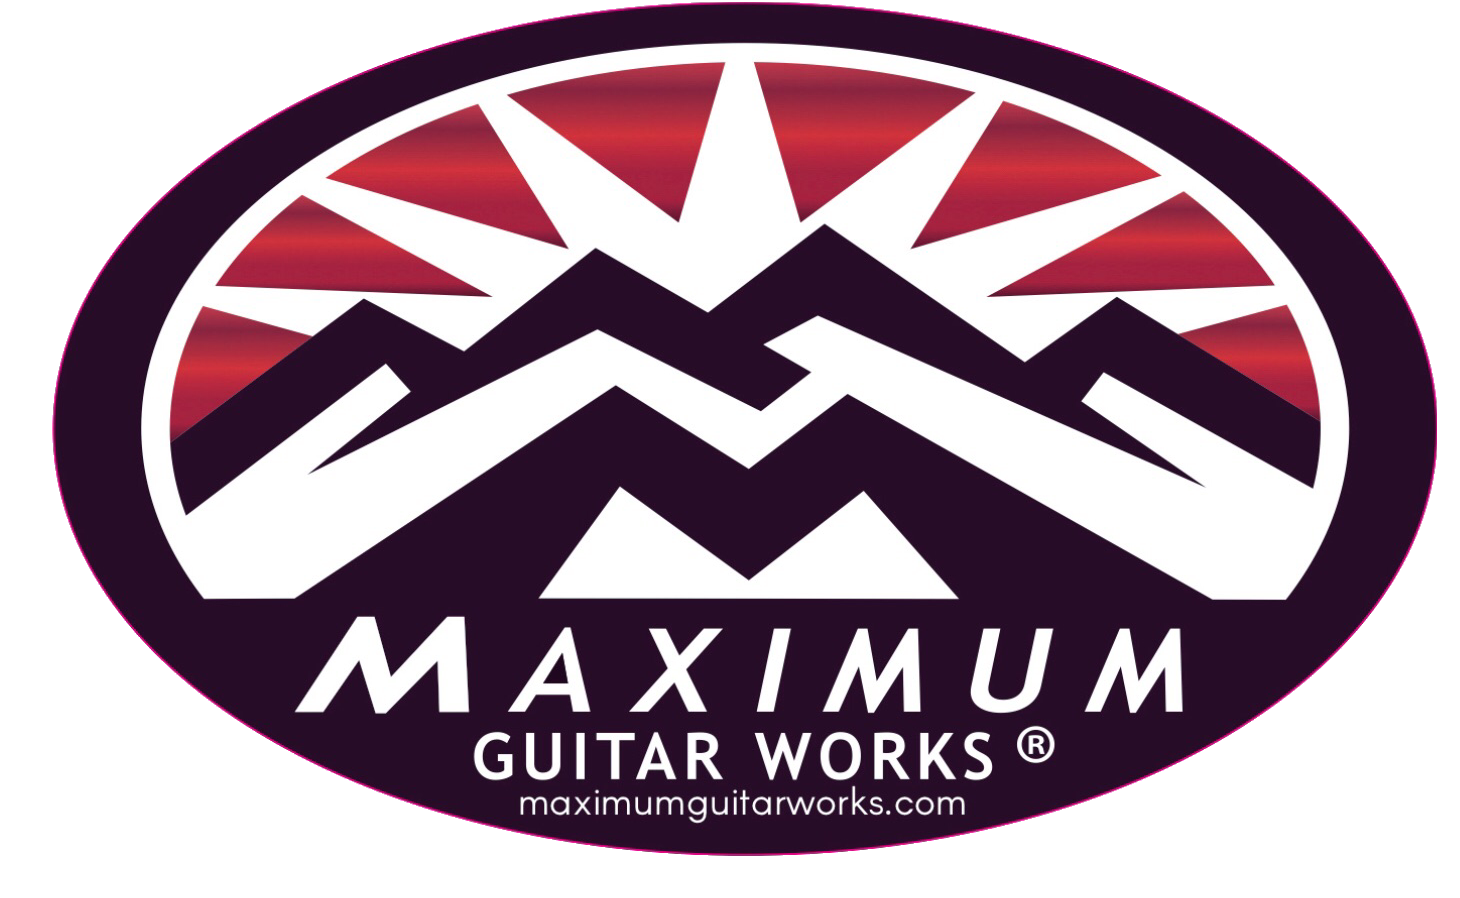 the maximum guitar works logo